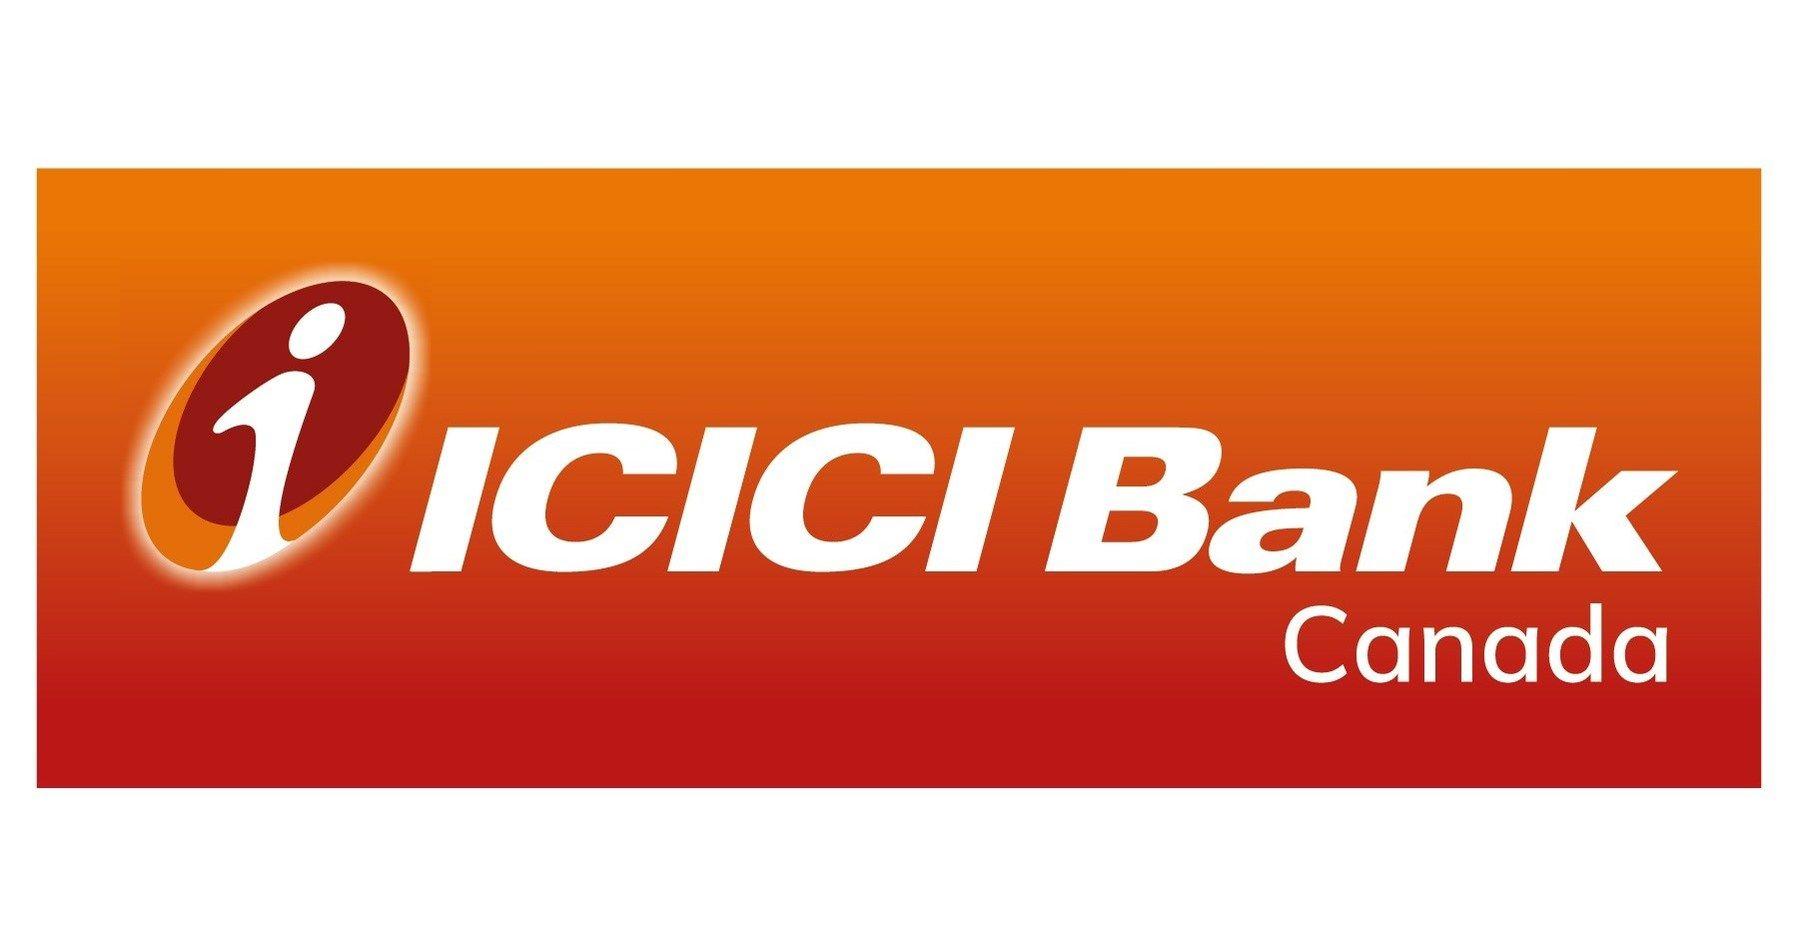 ICICI Bank Logo - RBC and ICICI Bank Canada collaborate